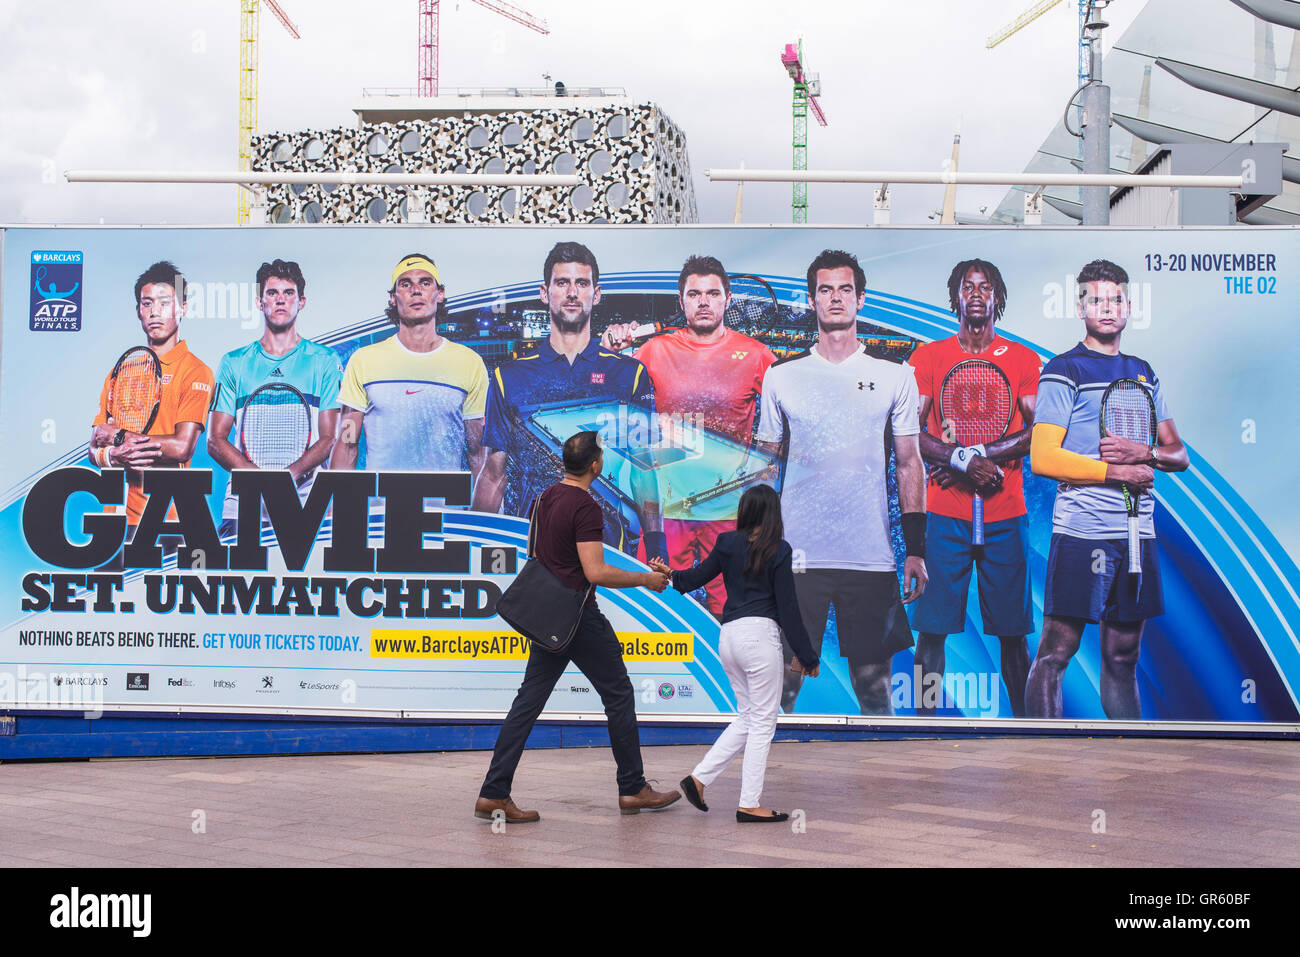 Par ver una gigantesca valla publicitaria que promueve el barclays atp world tour finals 2016 que se celebrará en Londres del 13 al 20 de noviembre Foto de stock